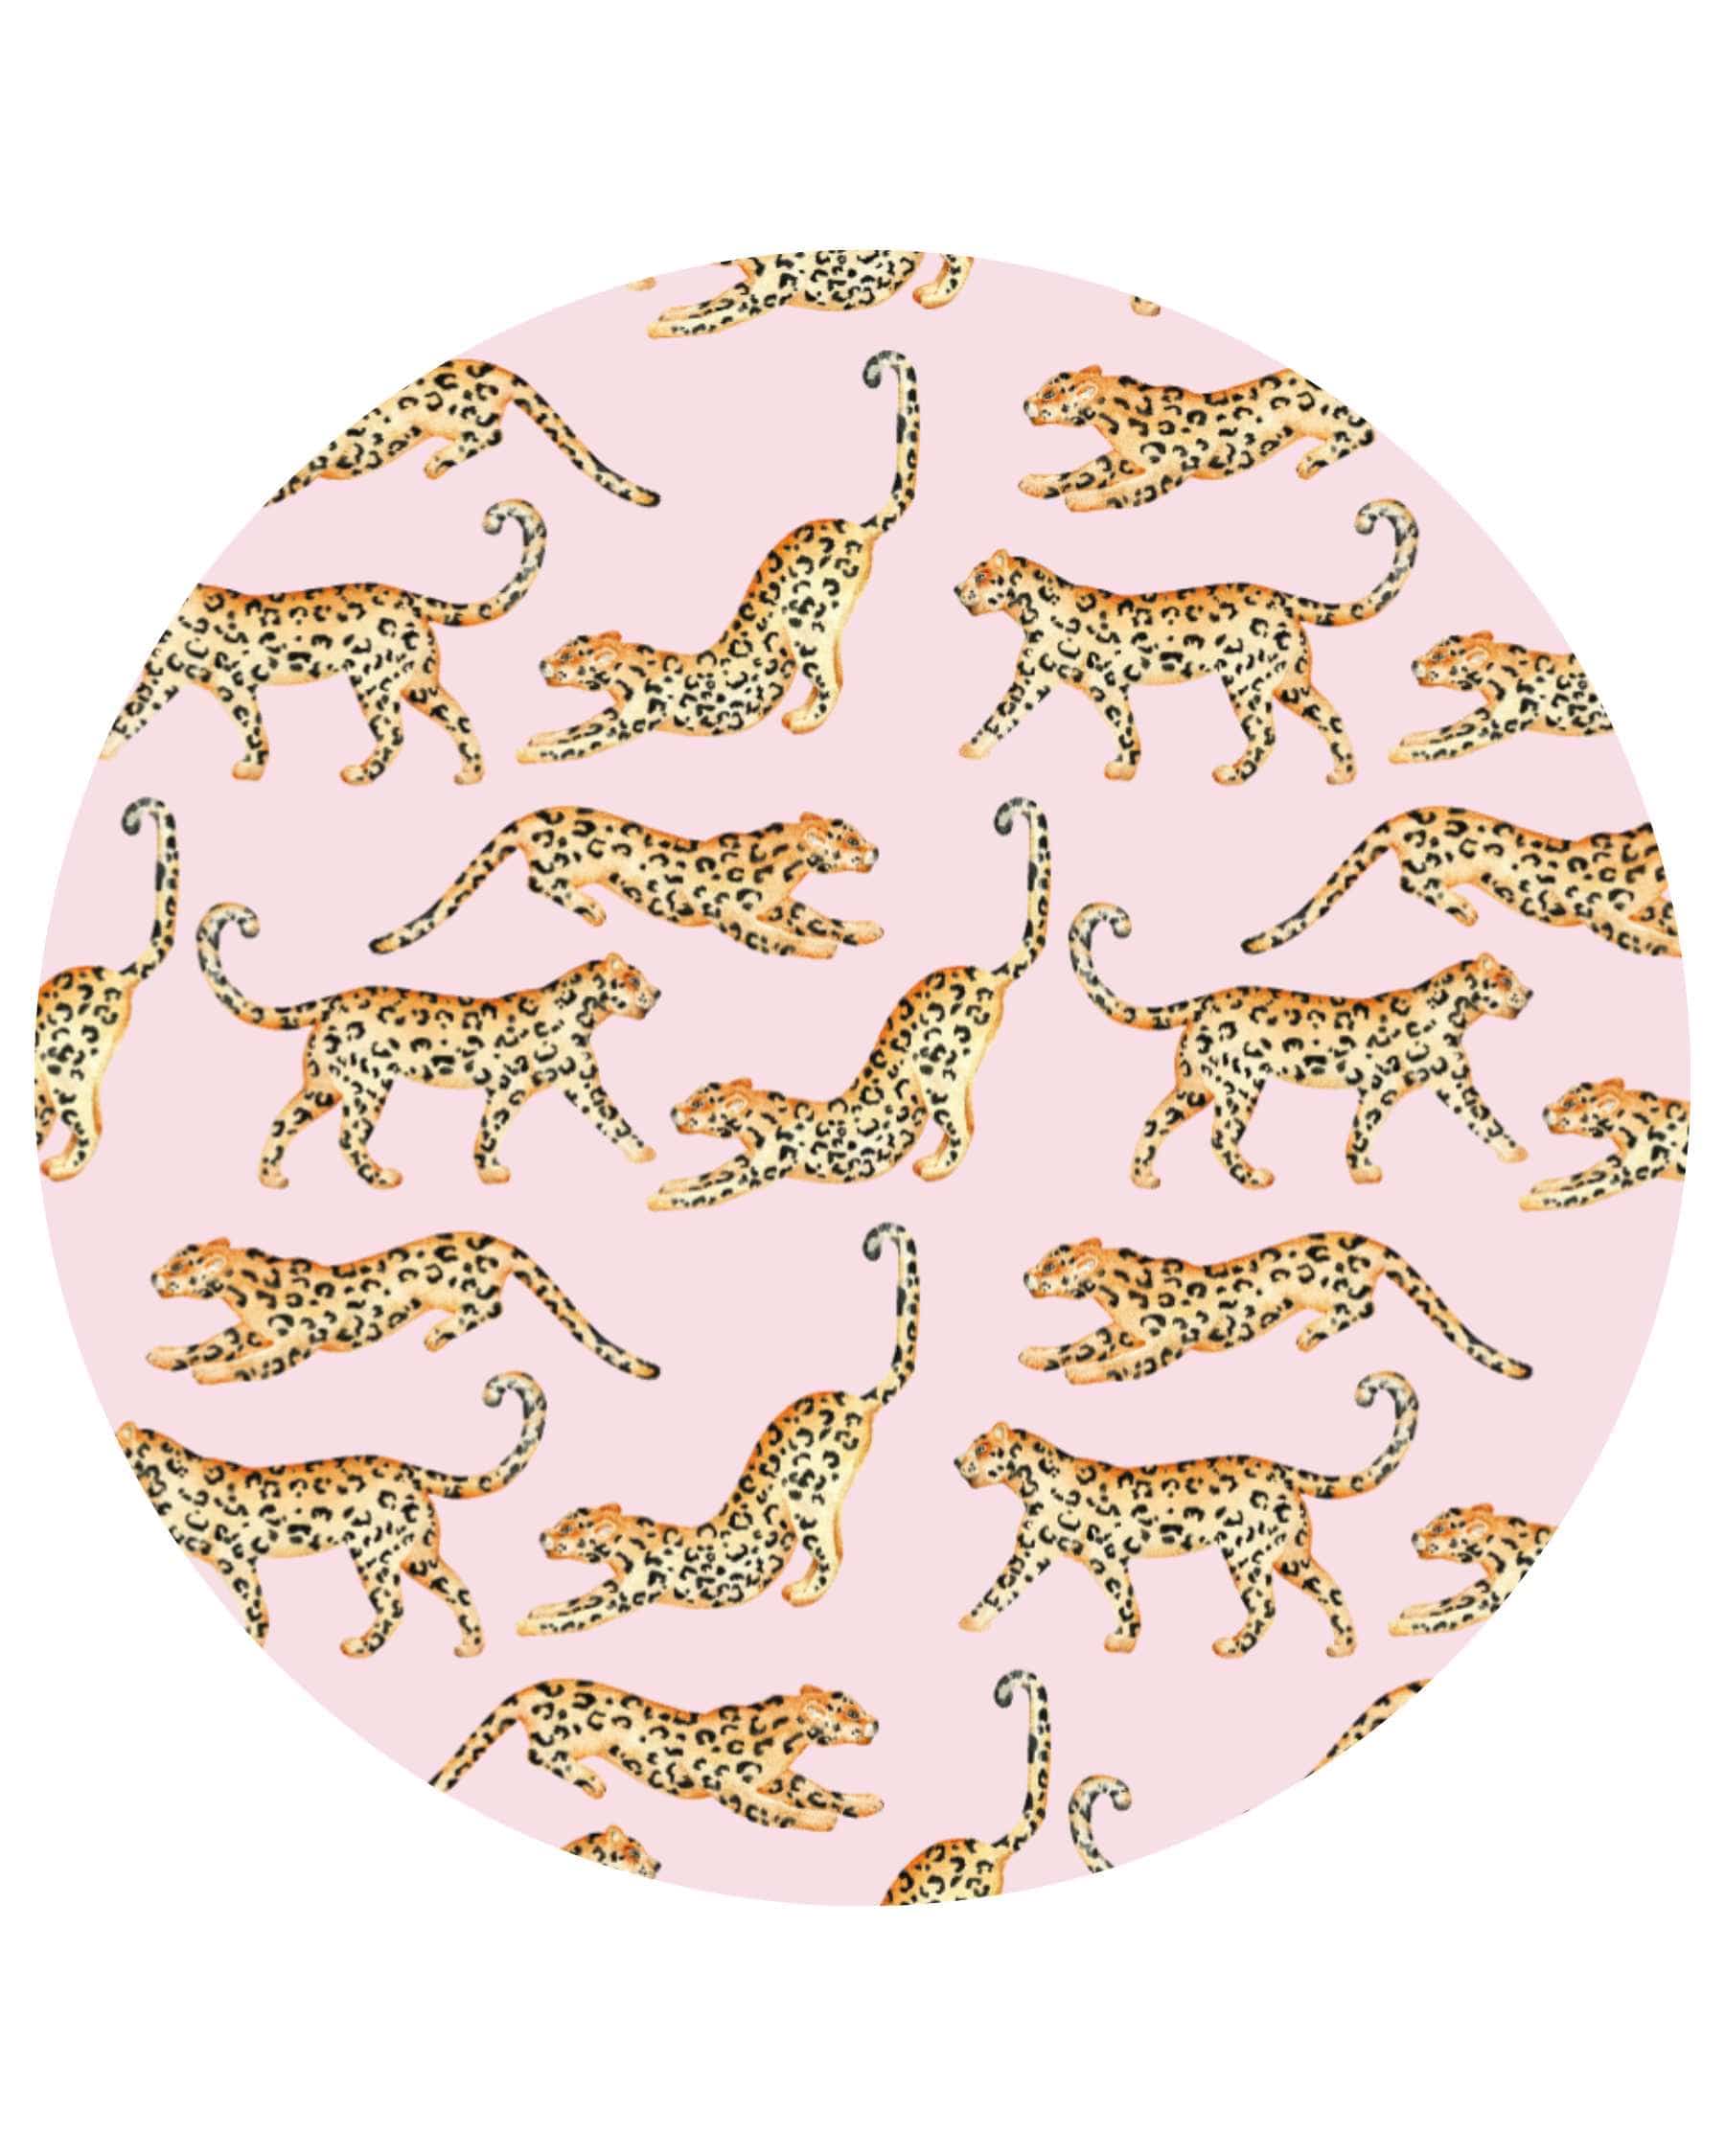 Cheetah Pillowcases: Set of 2